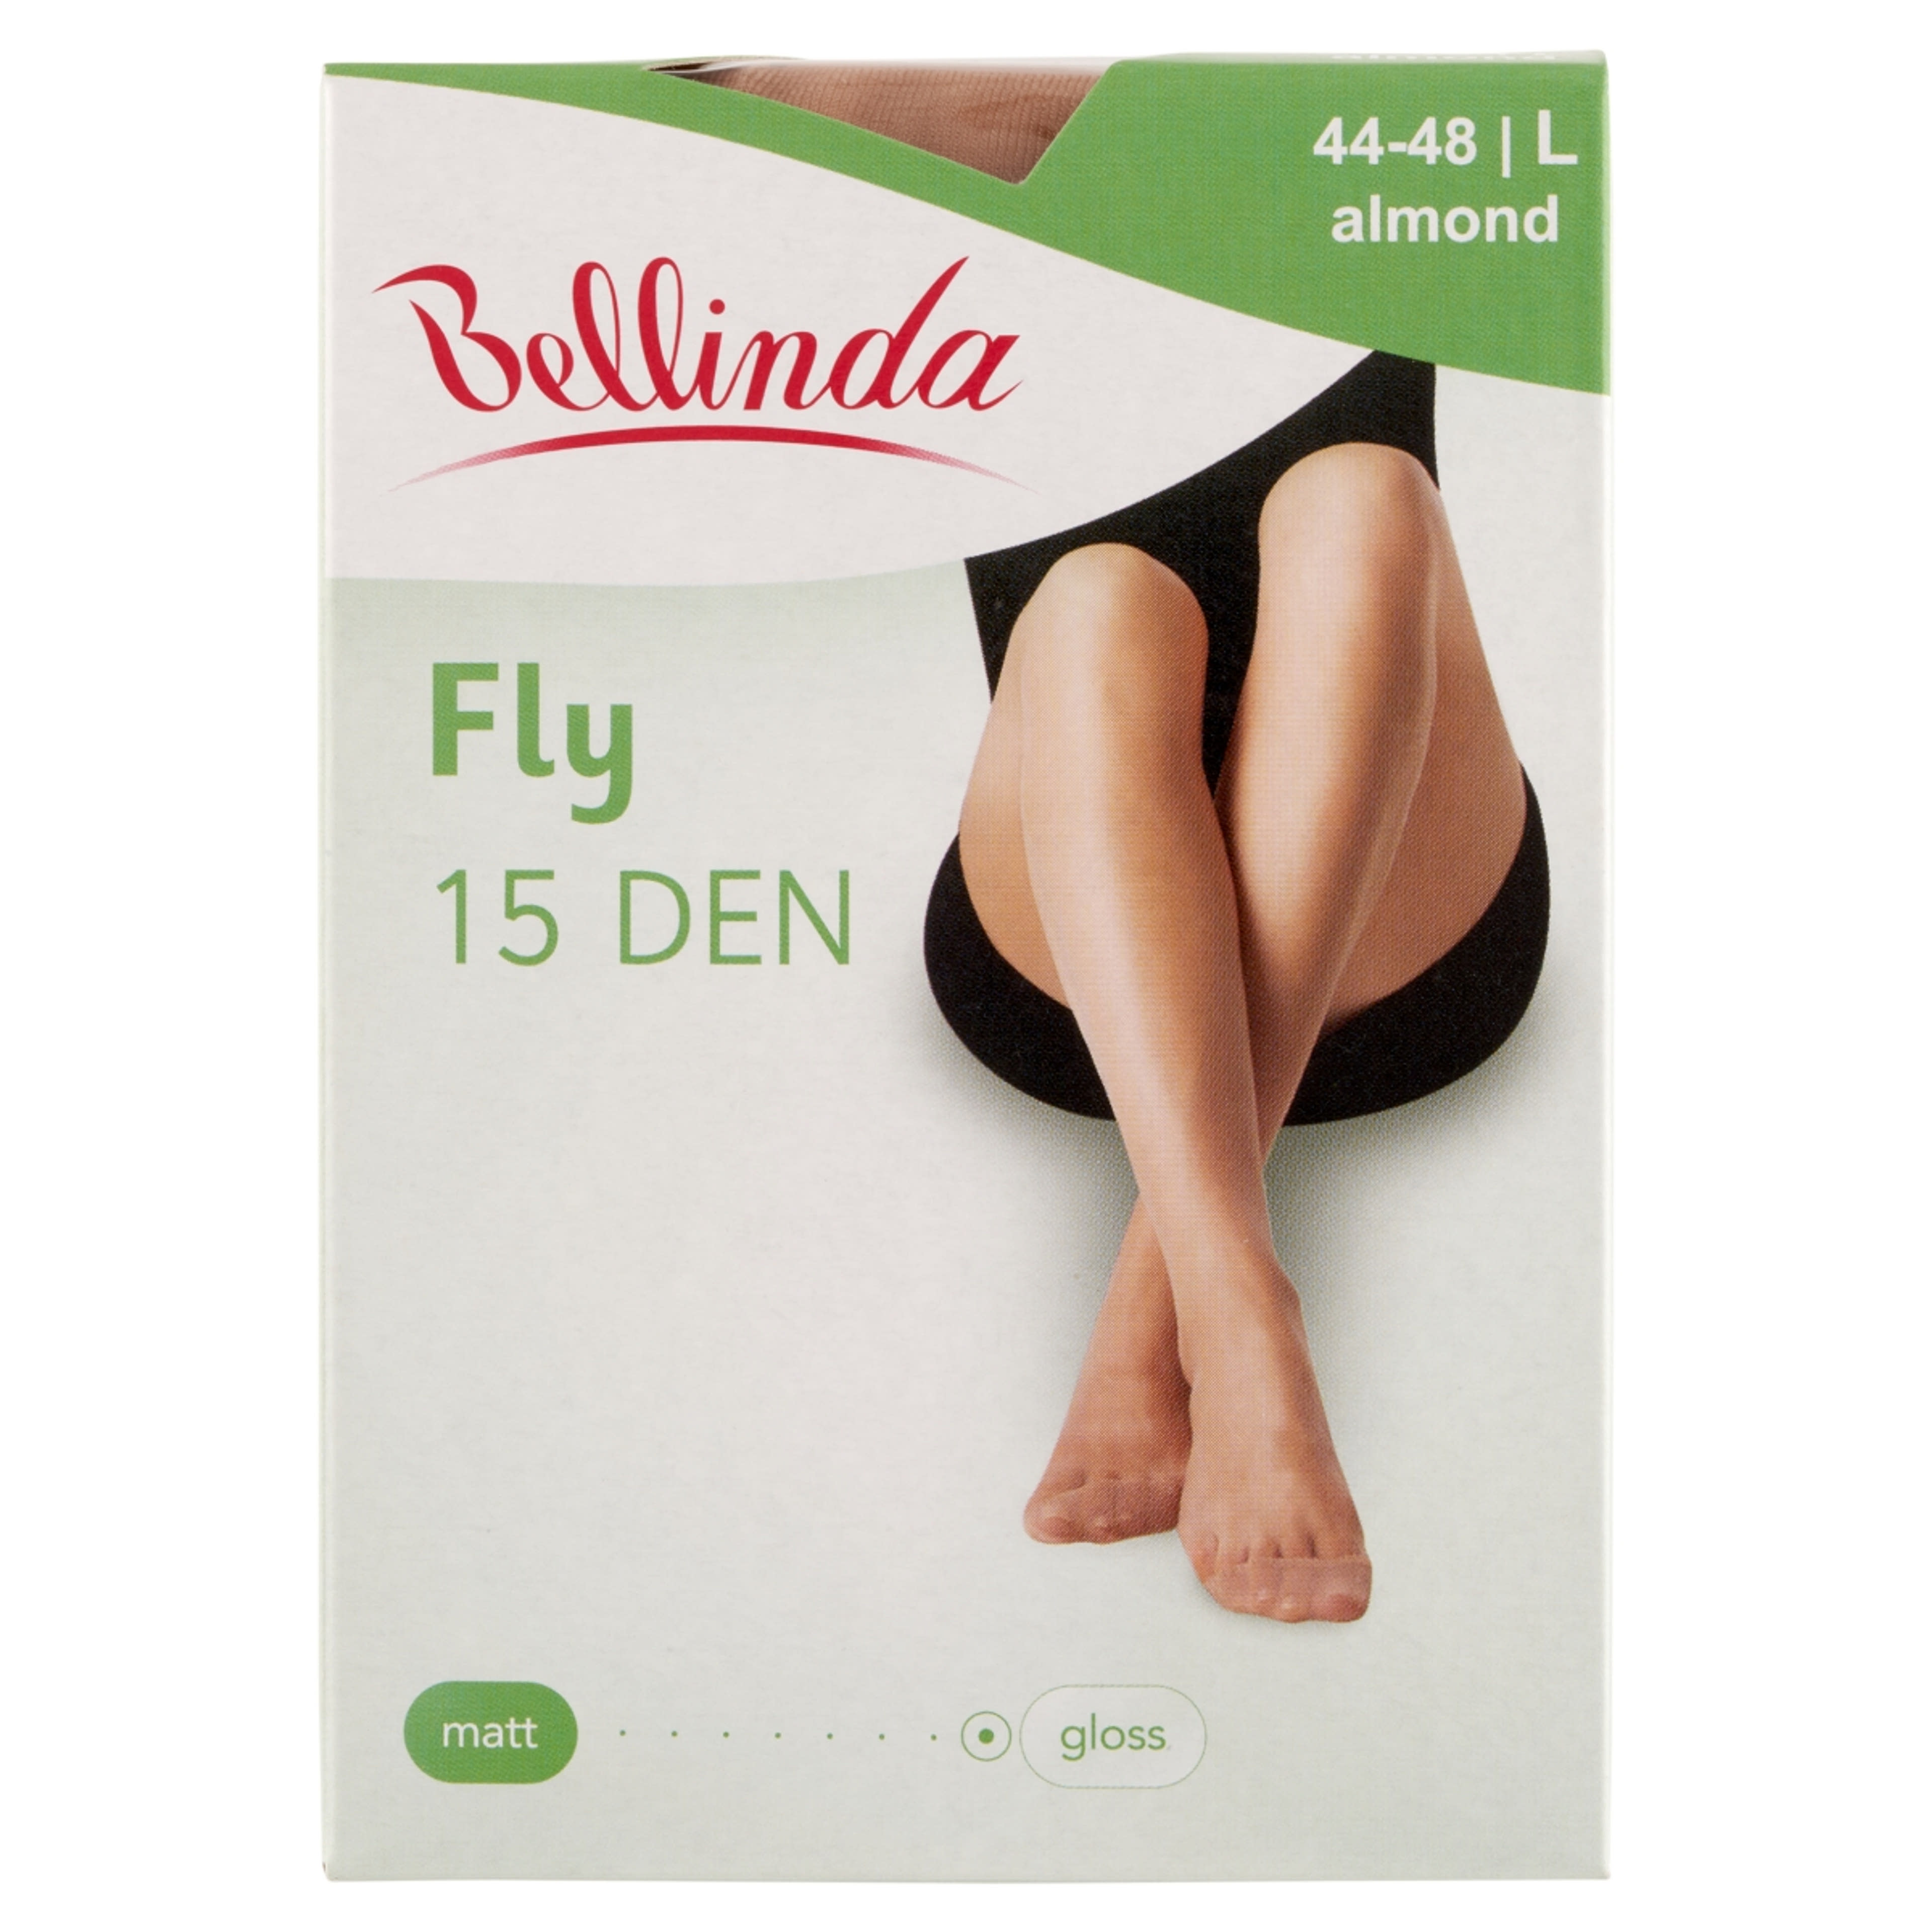 Bellinda Fly 15 Den Almond L Harisnya - 1 db-1